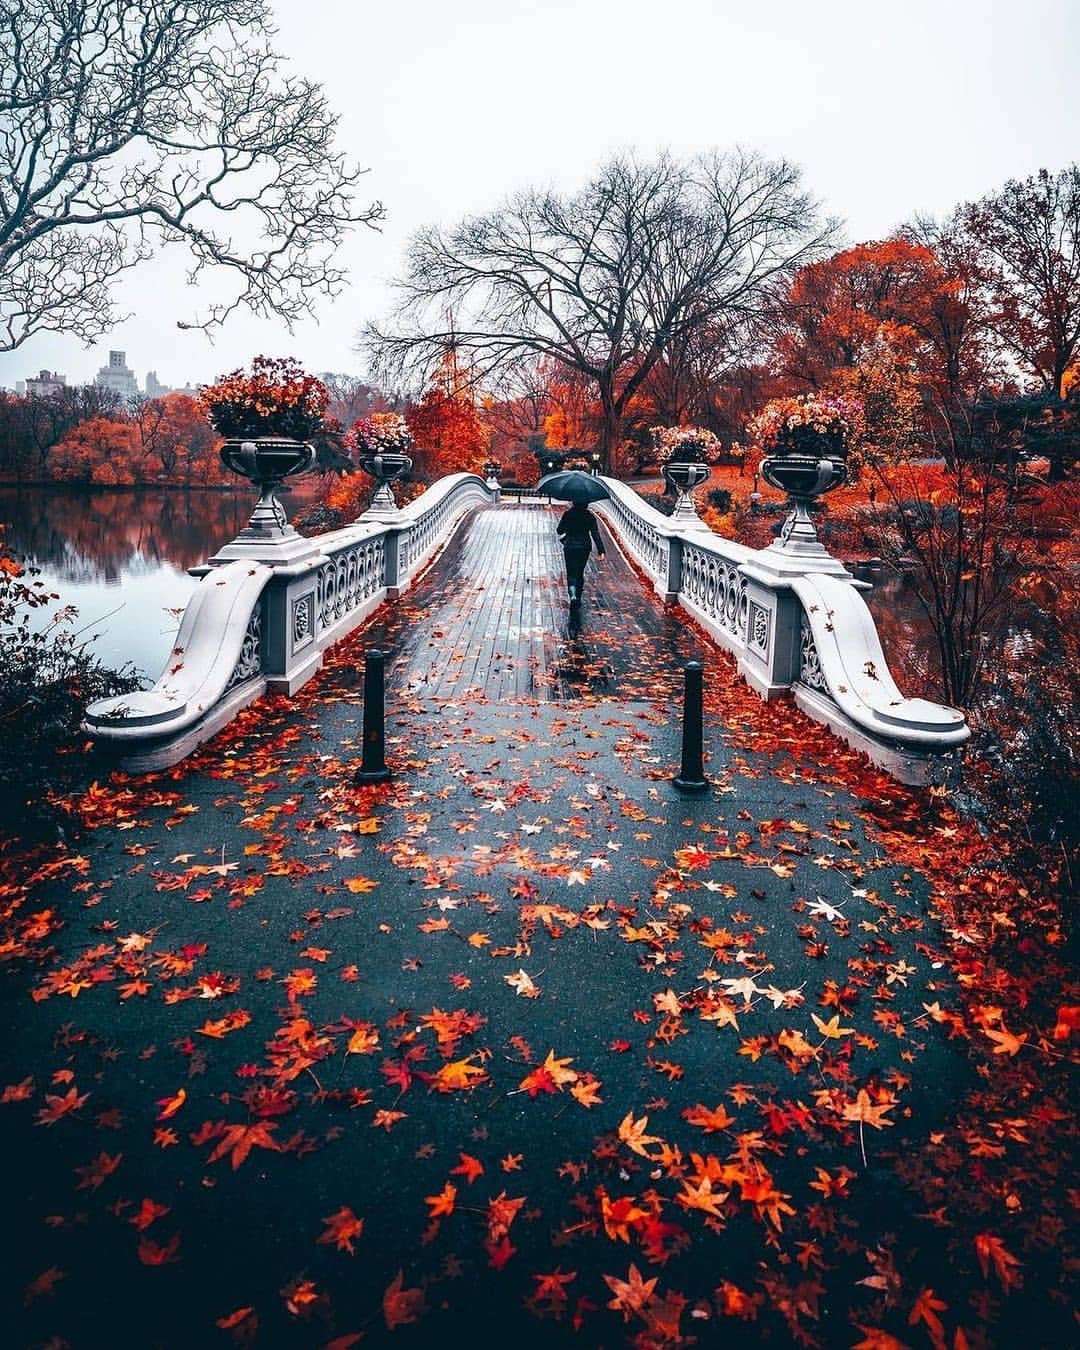 in autumn, crossing this bridge is pure poetry